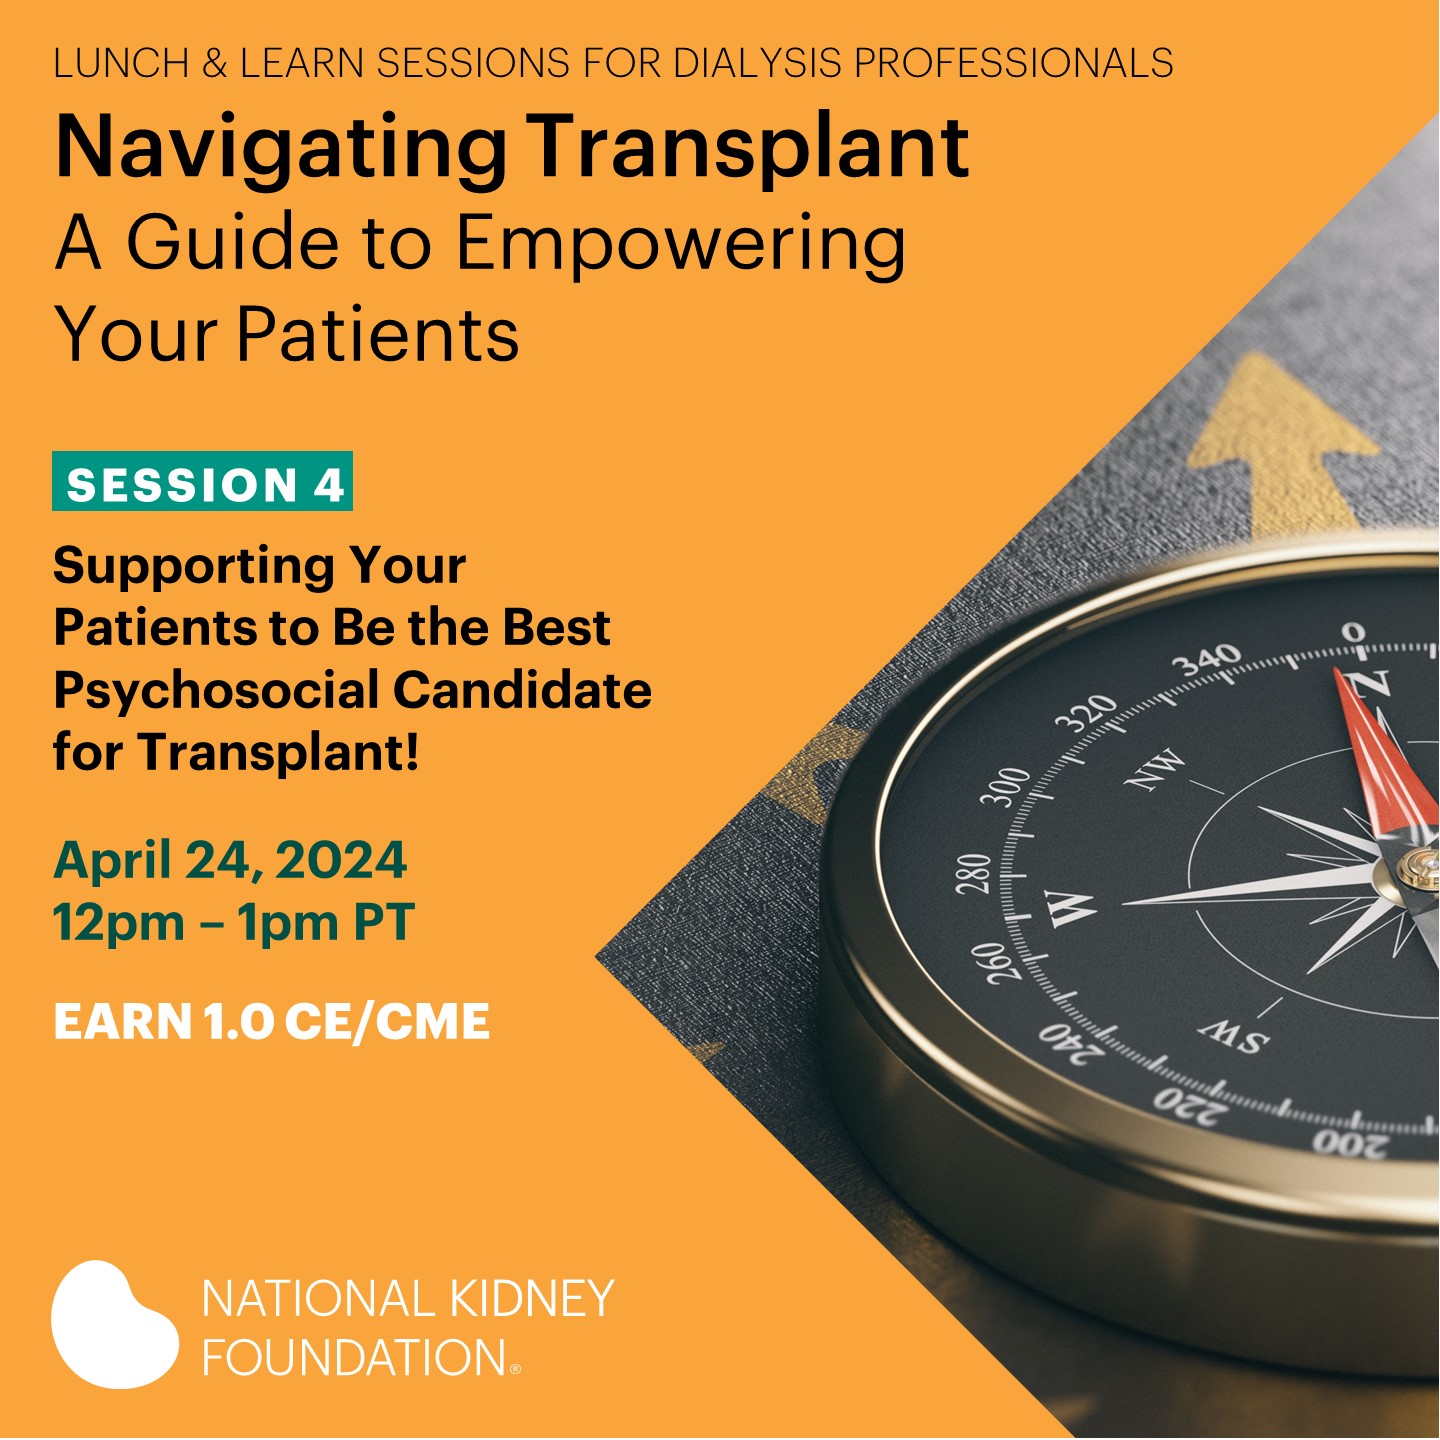 Navigating Transplant Session 4 Graphic